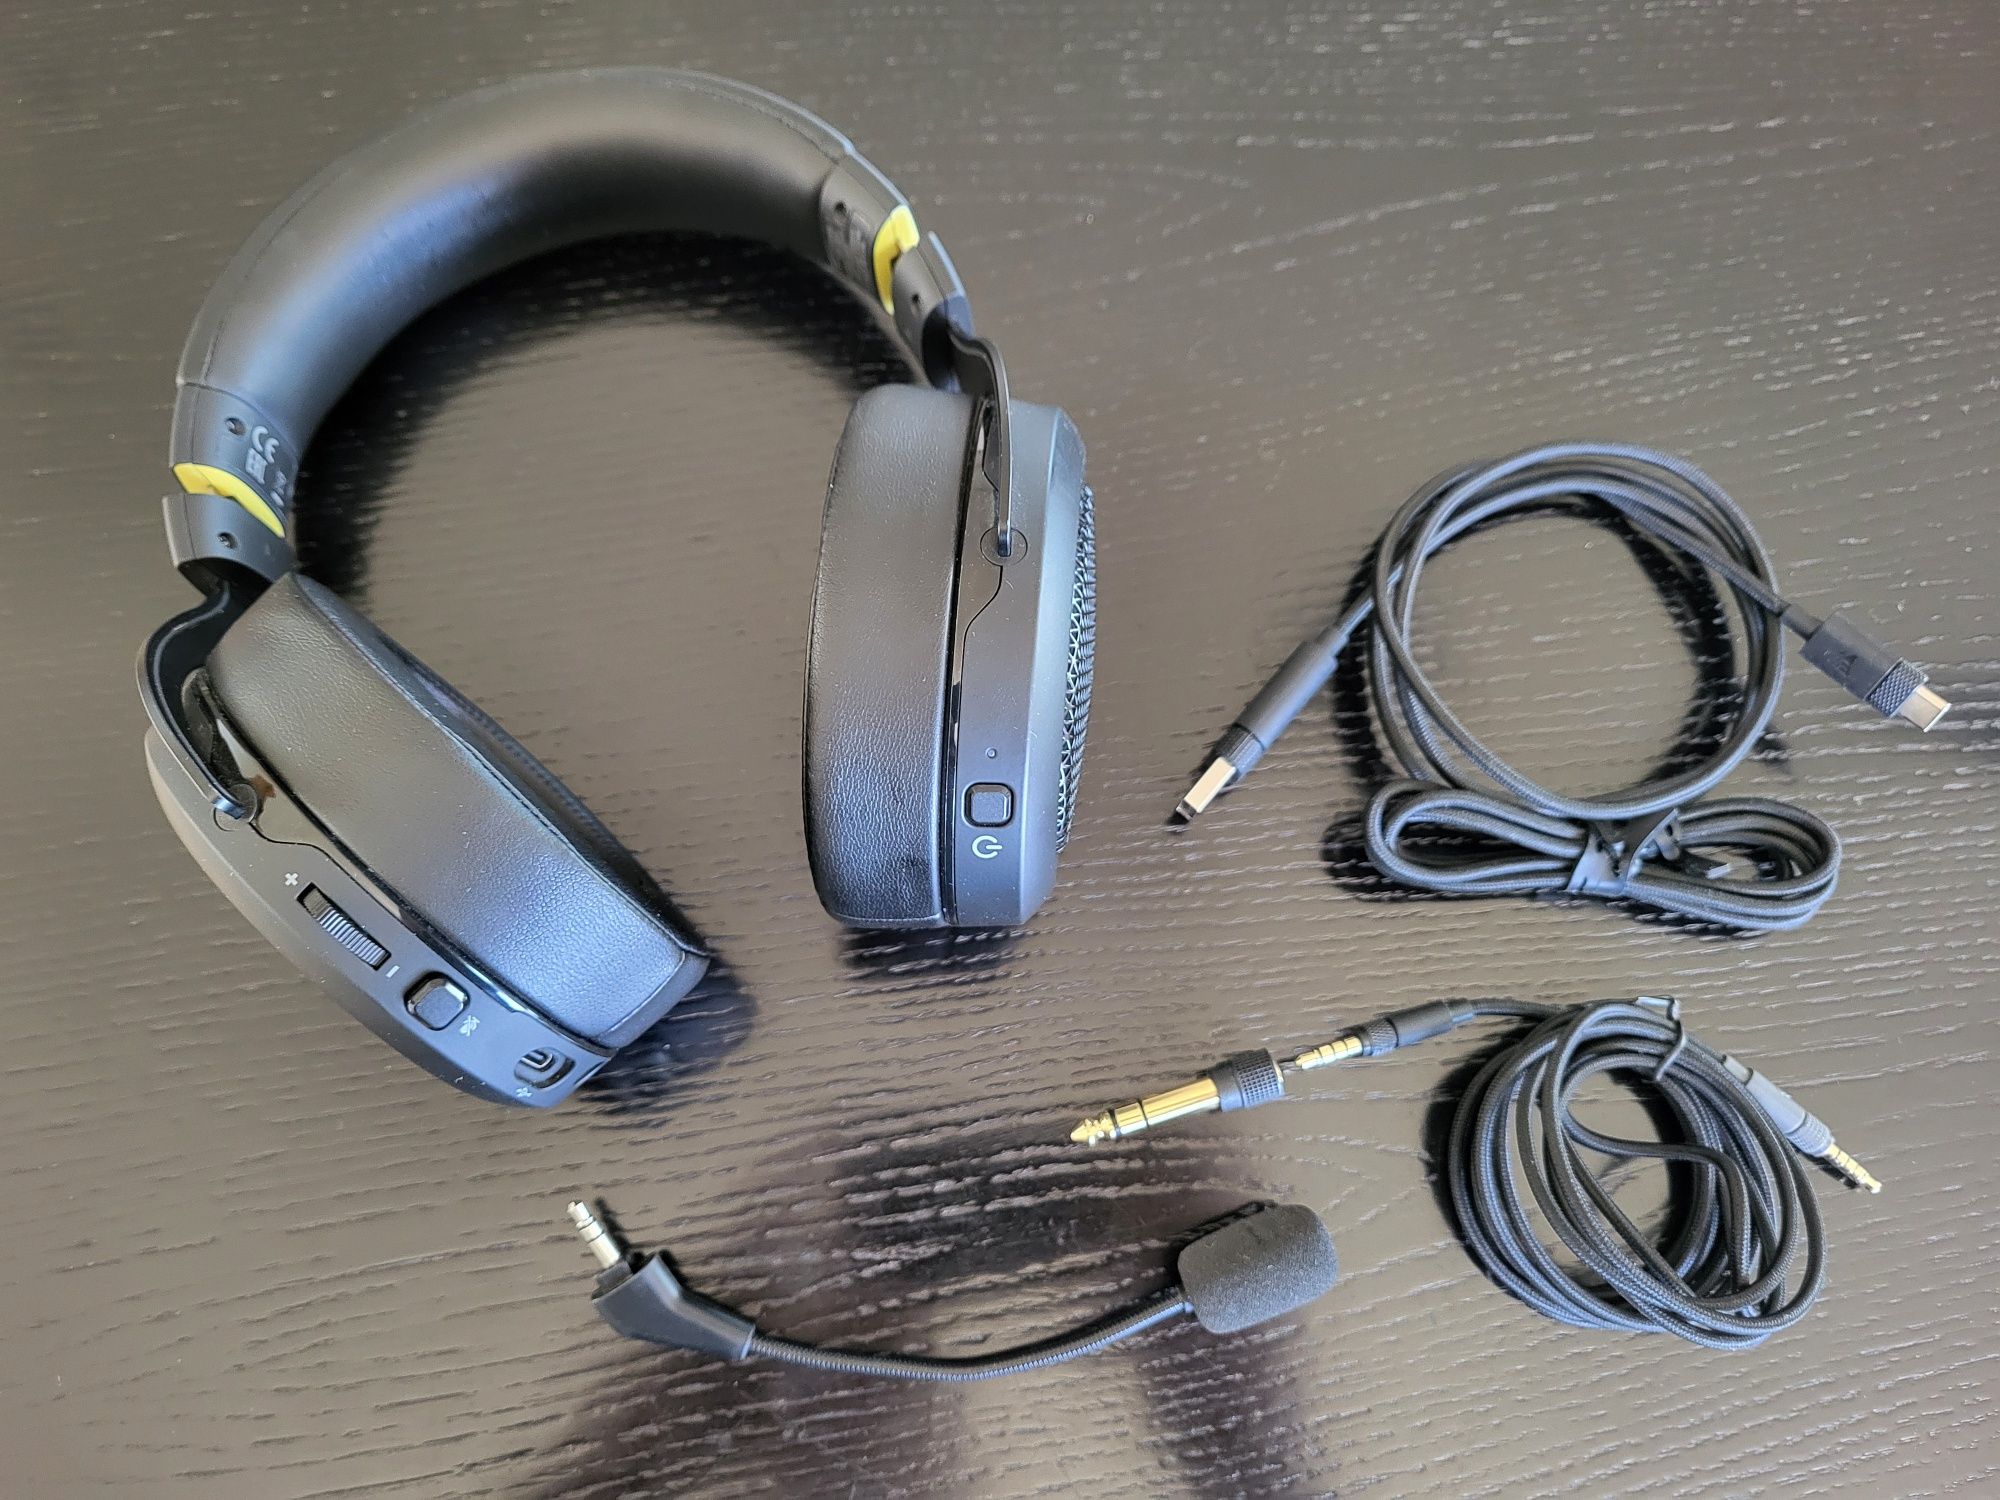 Auscultadores / HeadPhones Bluetooth Corsair HS70 (rigorosamente impec